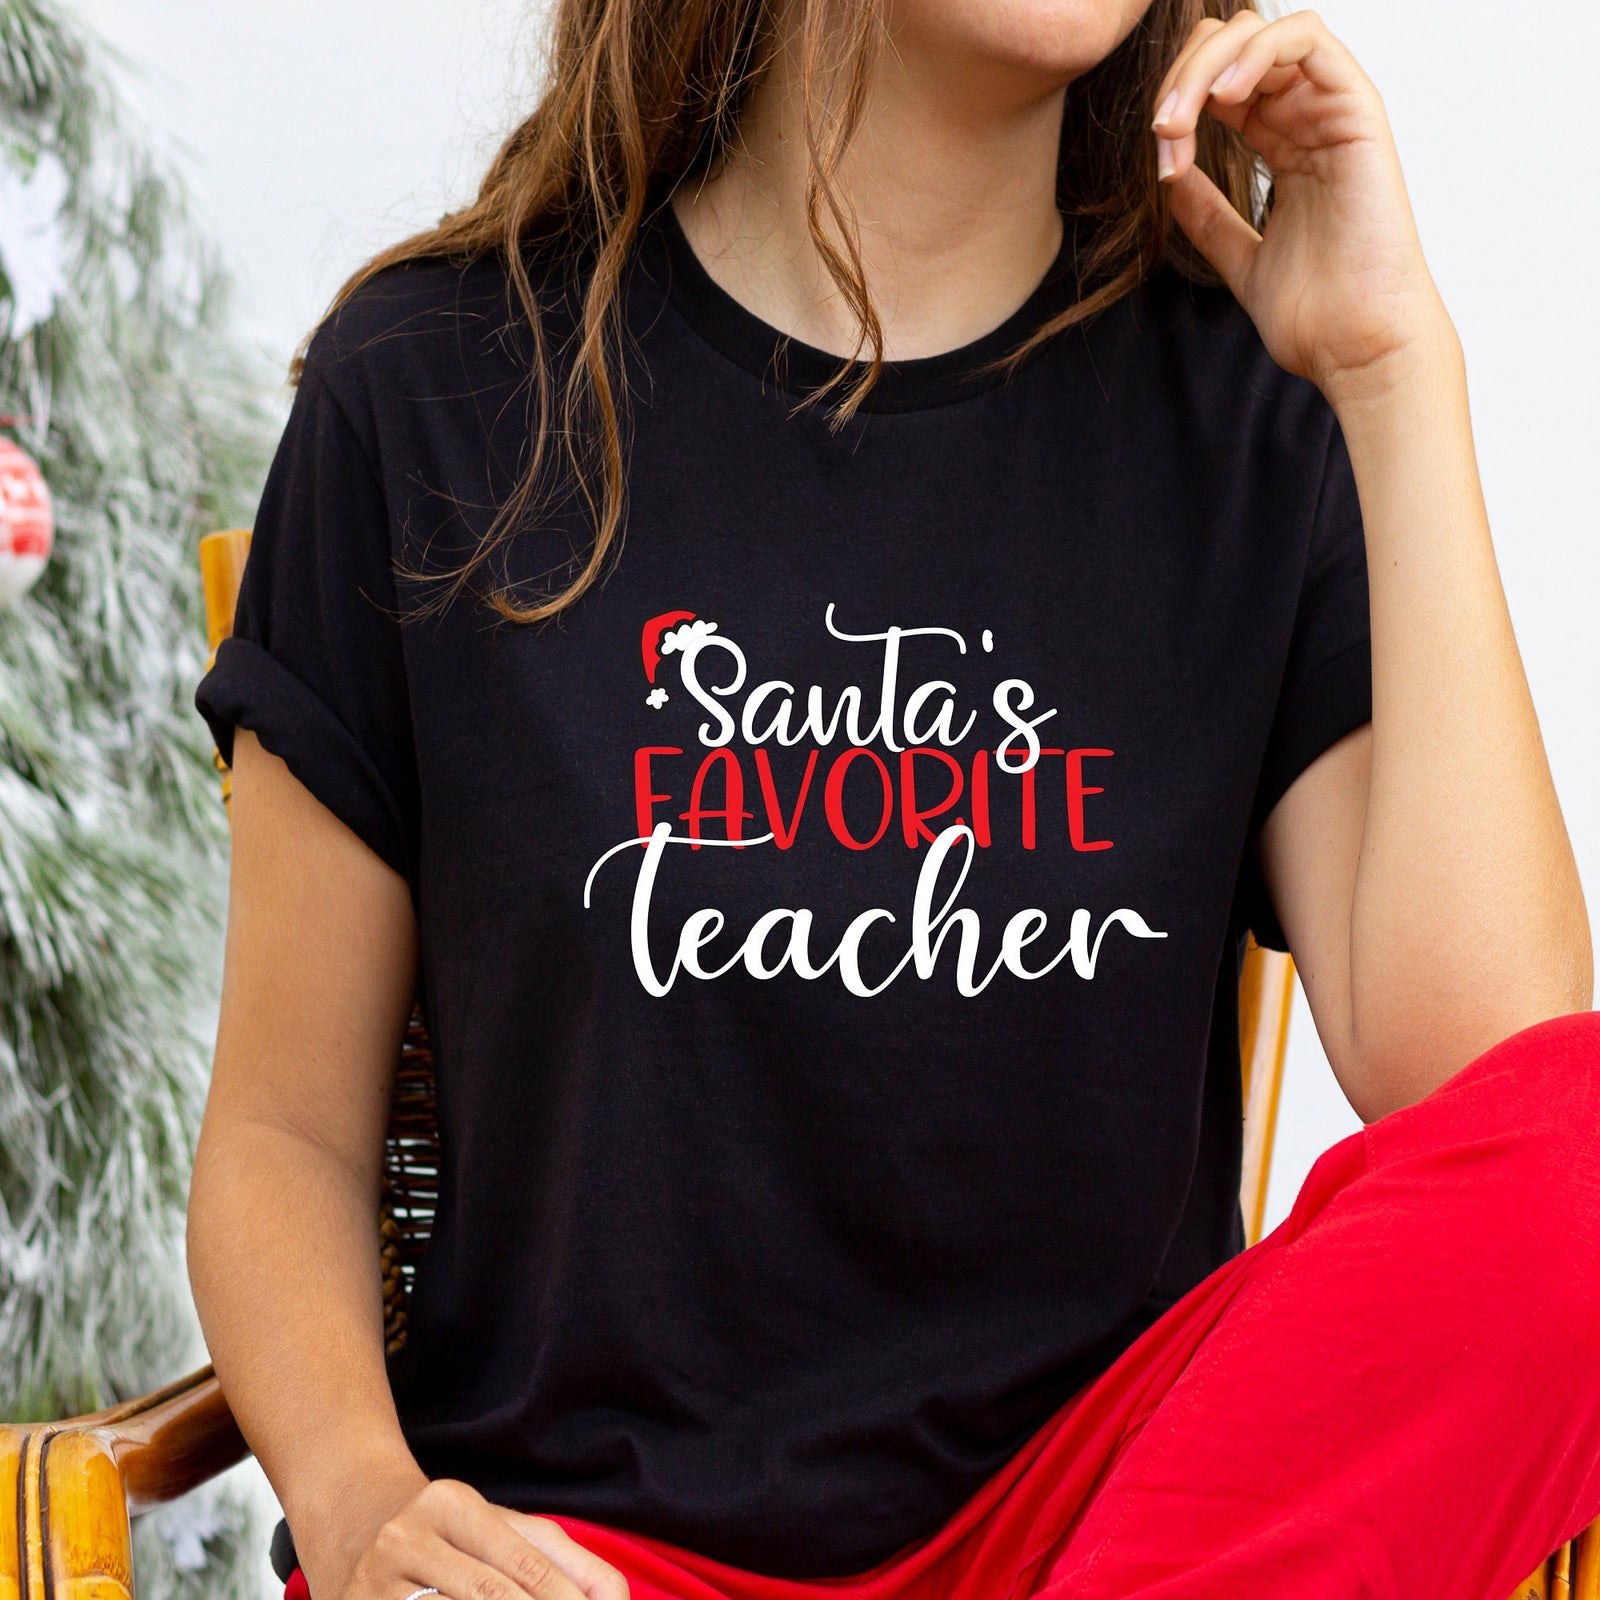 Santa's Favorite Teacher Christmas T Shirt - Favorite Teacher Holiday Gift Shirt - School Holiday Teacher Shirt